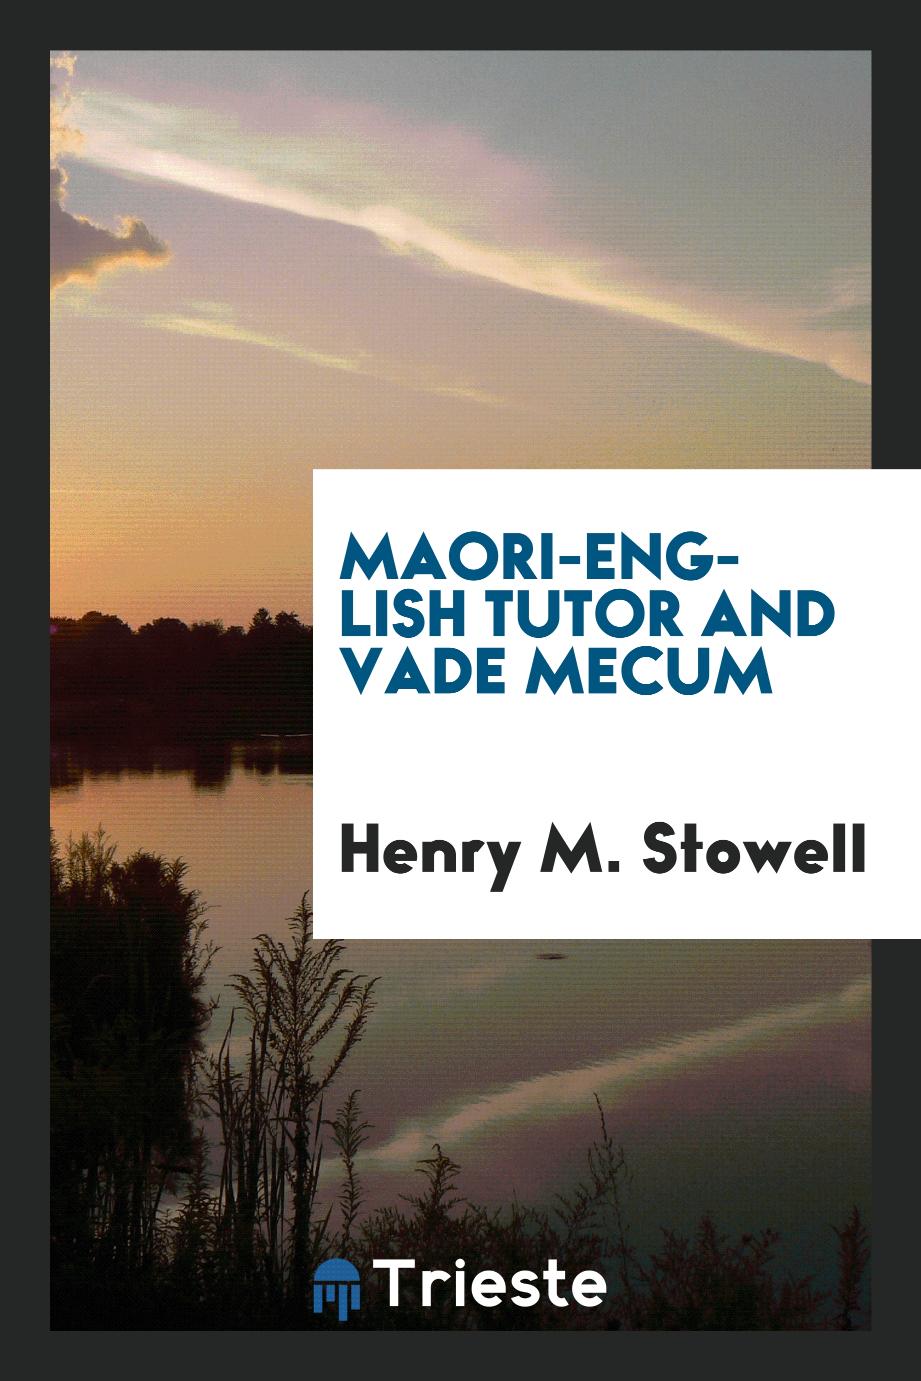 Henry M. Stowell - Maori-English tutor and vade mecum